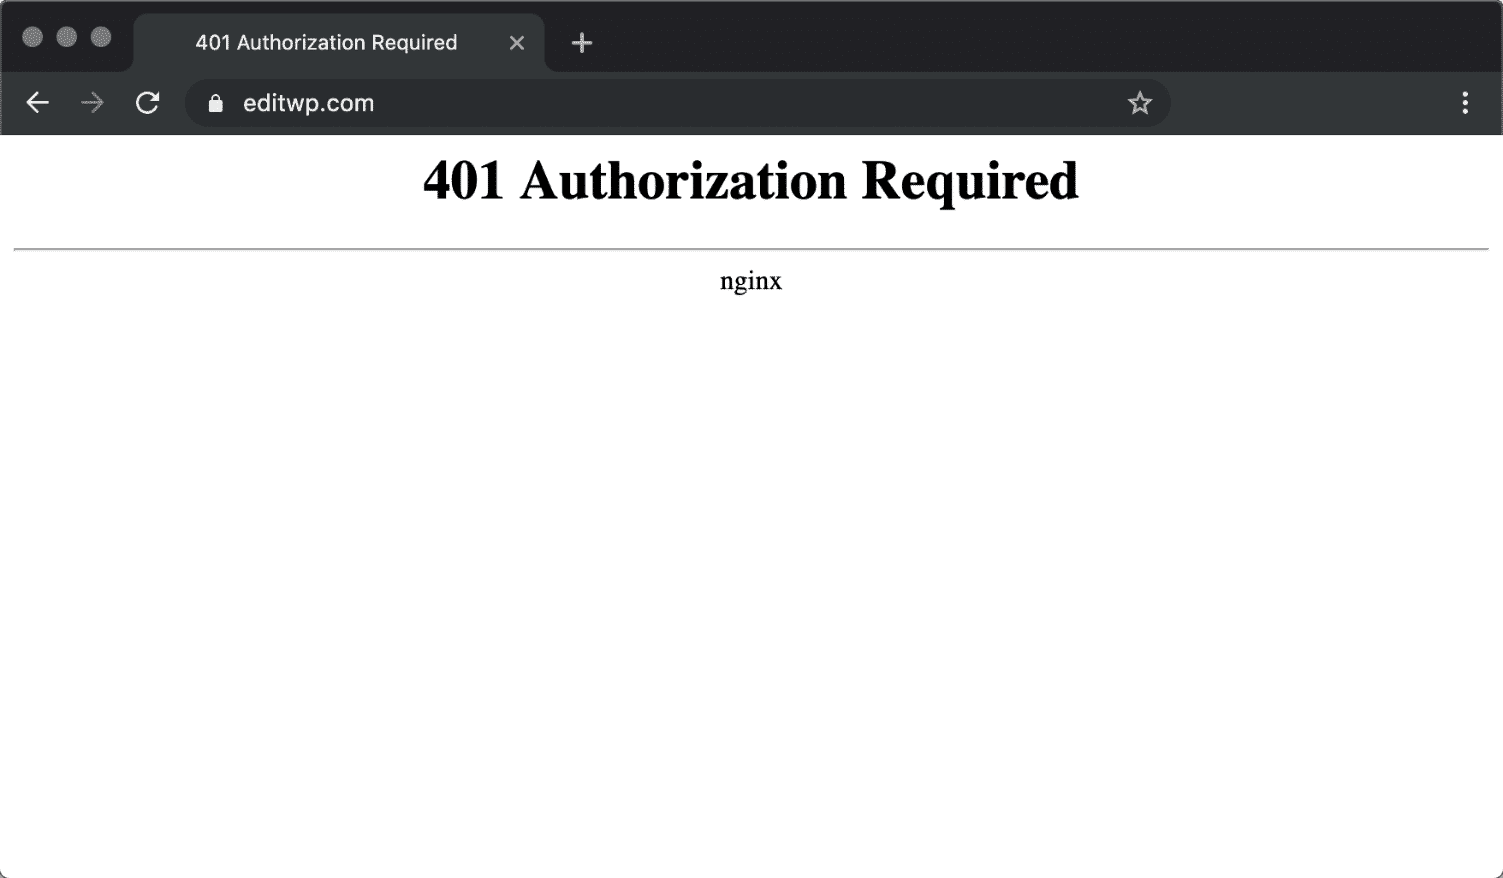 Nginx 401 authorization required error in Chrome